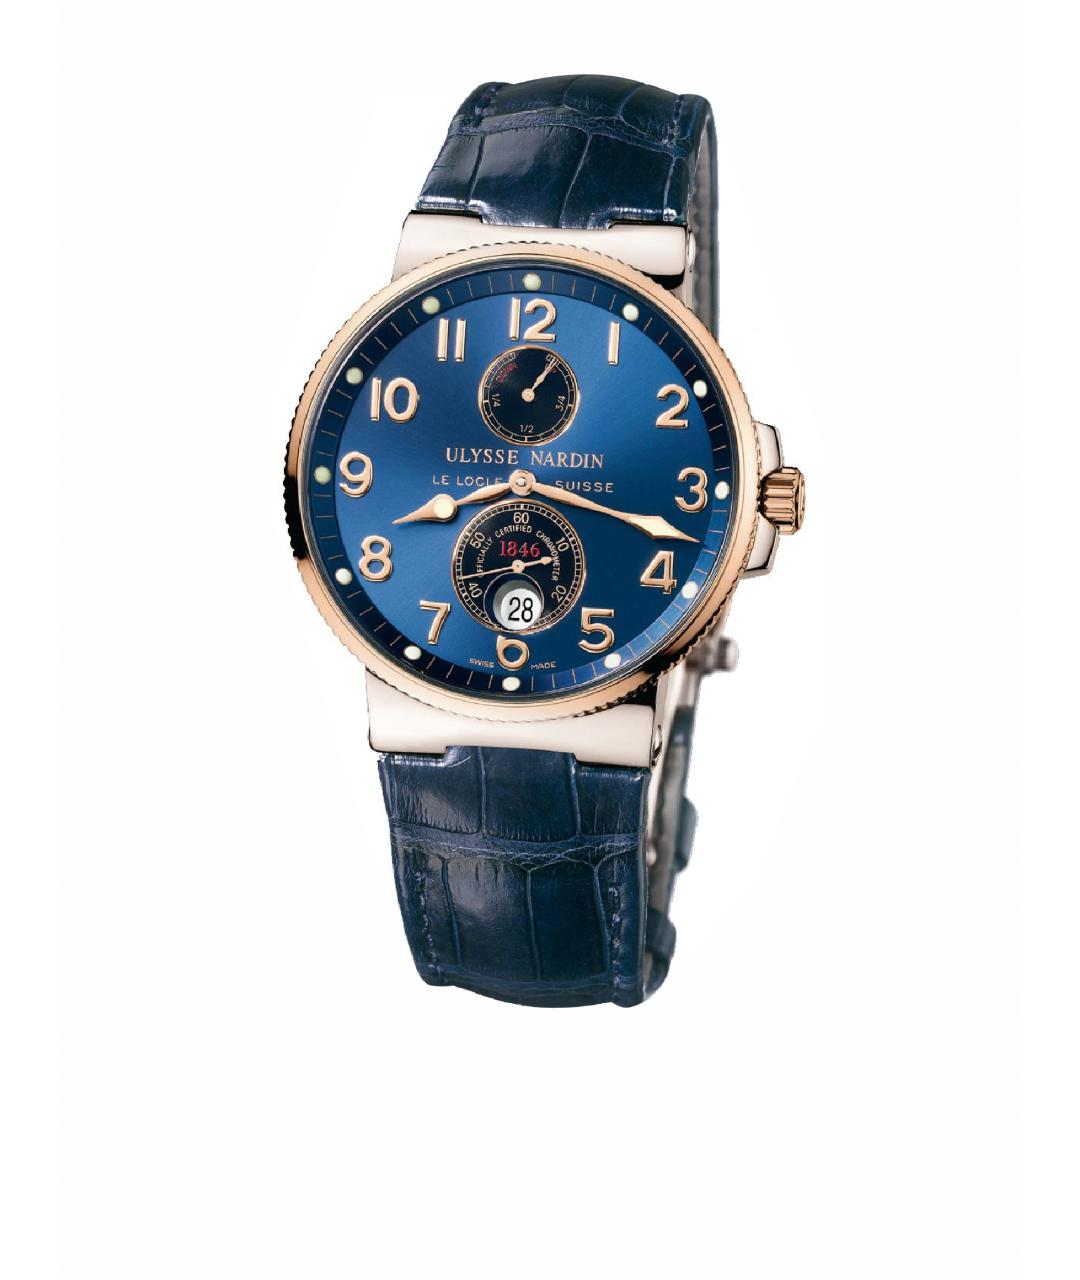 Ulysse Nardin Синие часы, фото 1